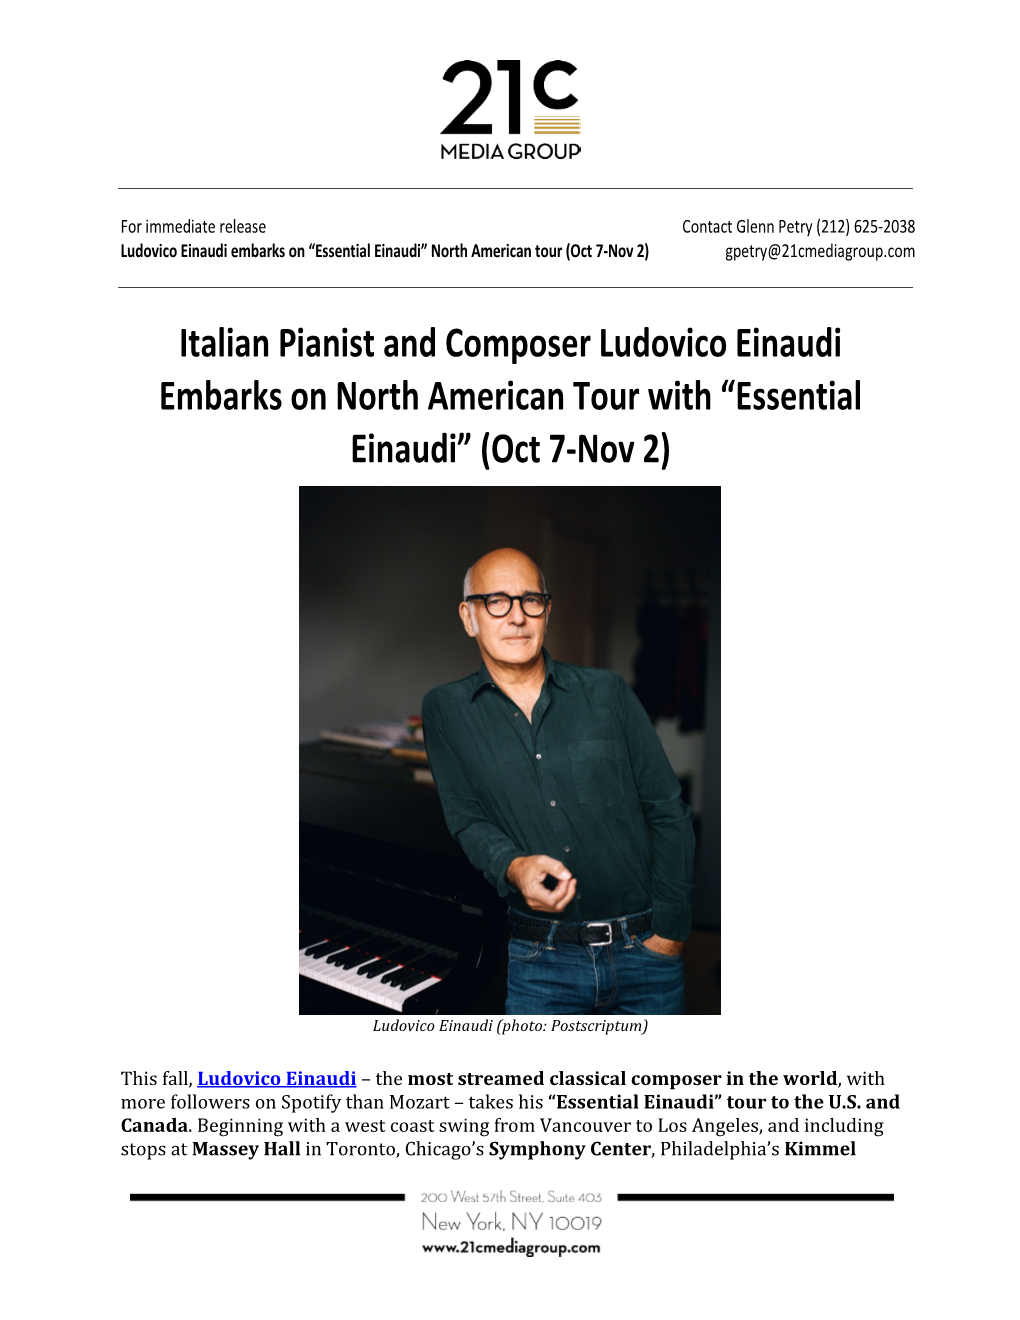 Italian Pianist and Composer Ludovico Einaudi Embarks on North American Tour with “Essential Einaudi” (Oct 7-Nov 2)